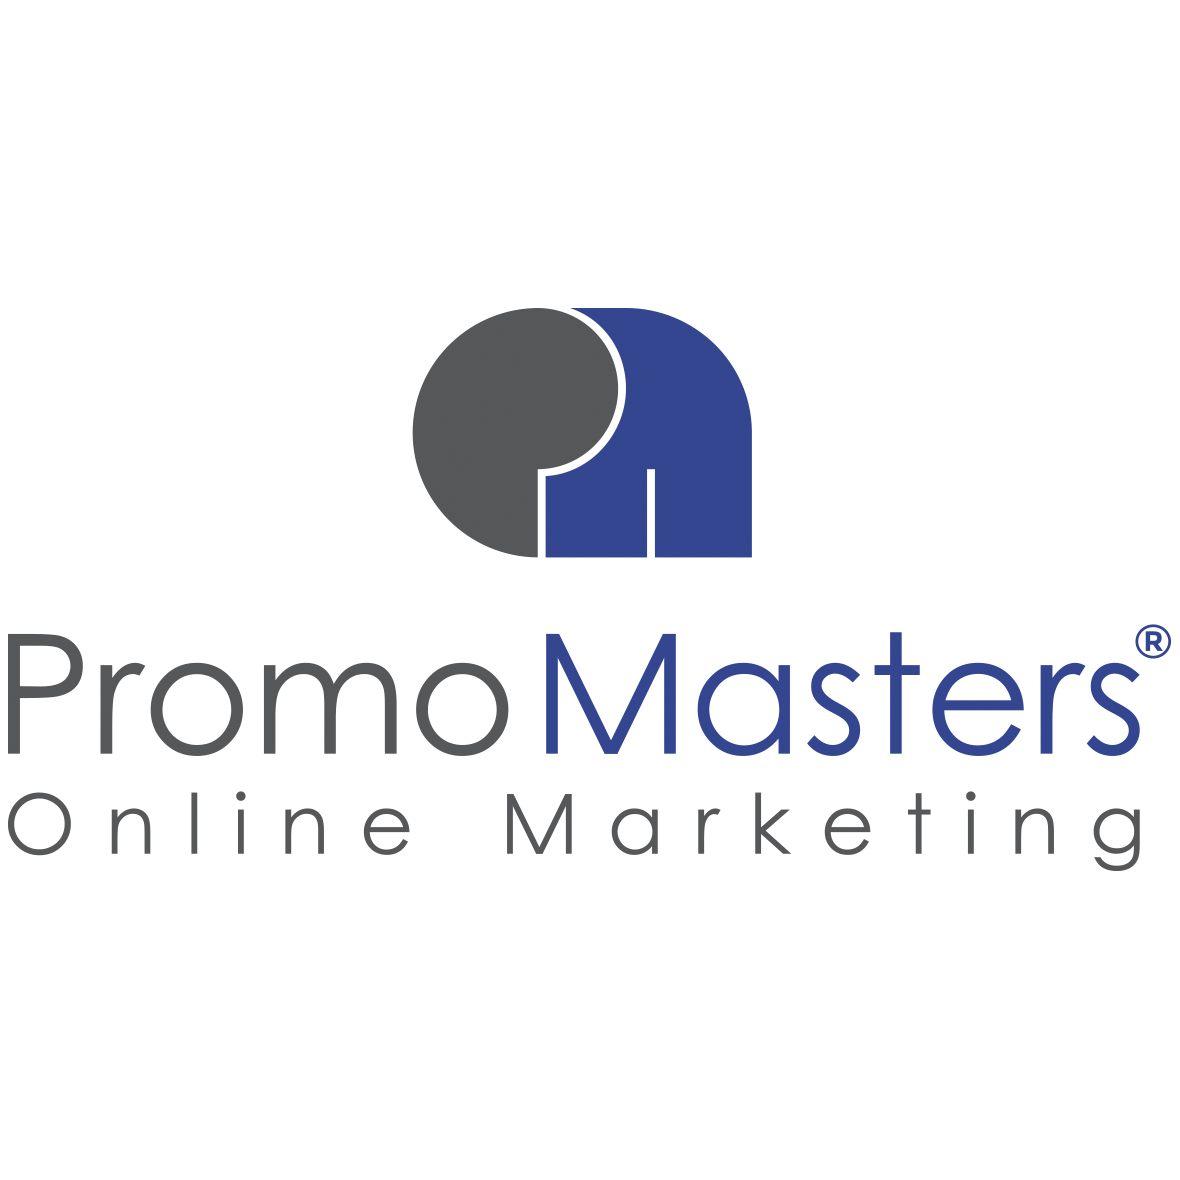 PromoMasters Online Marketing - SEO Agentur Wien Logo